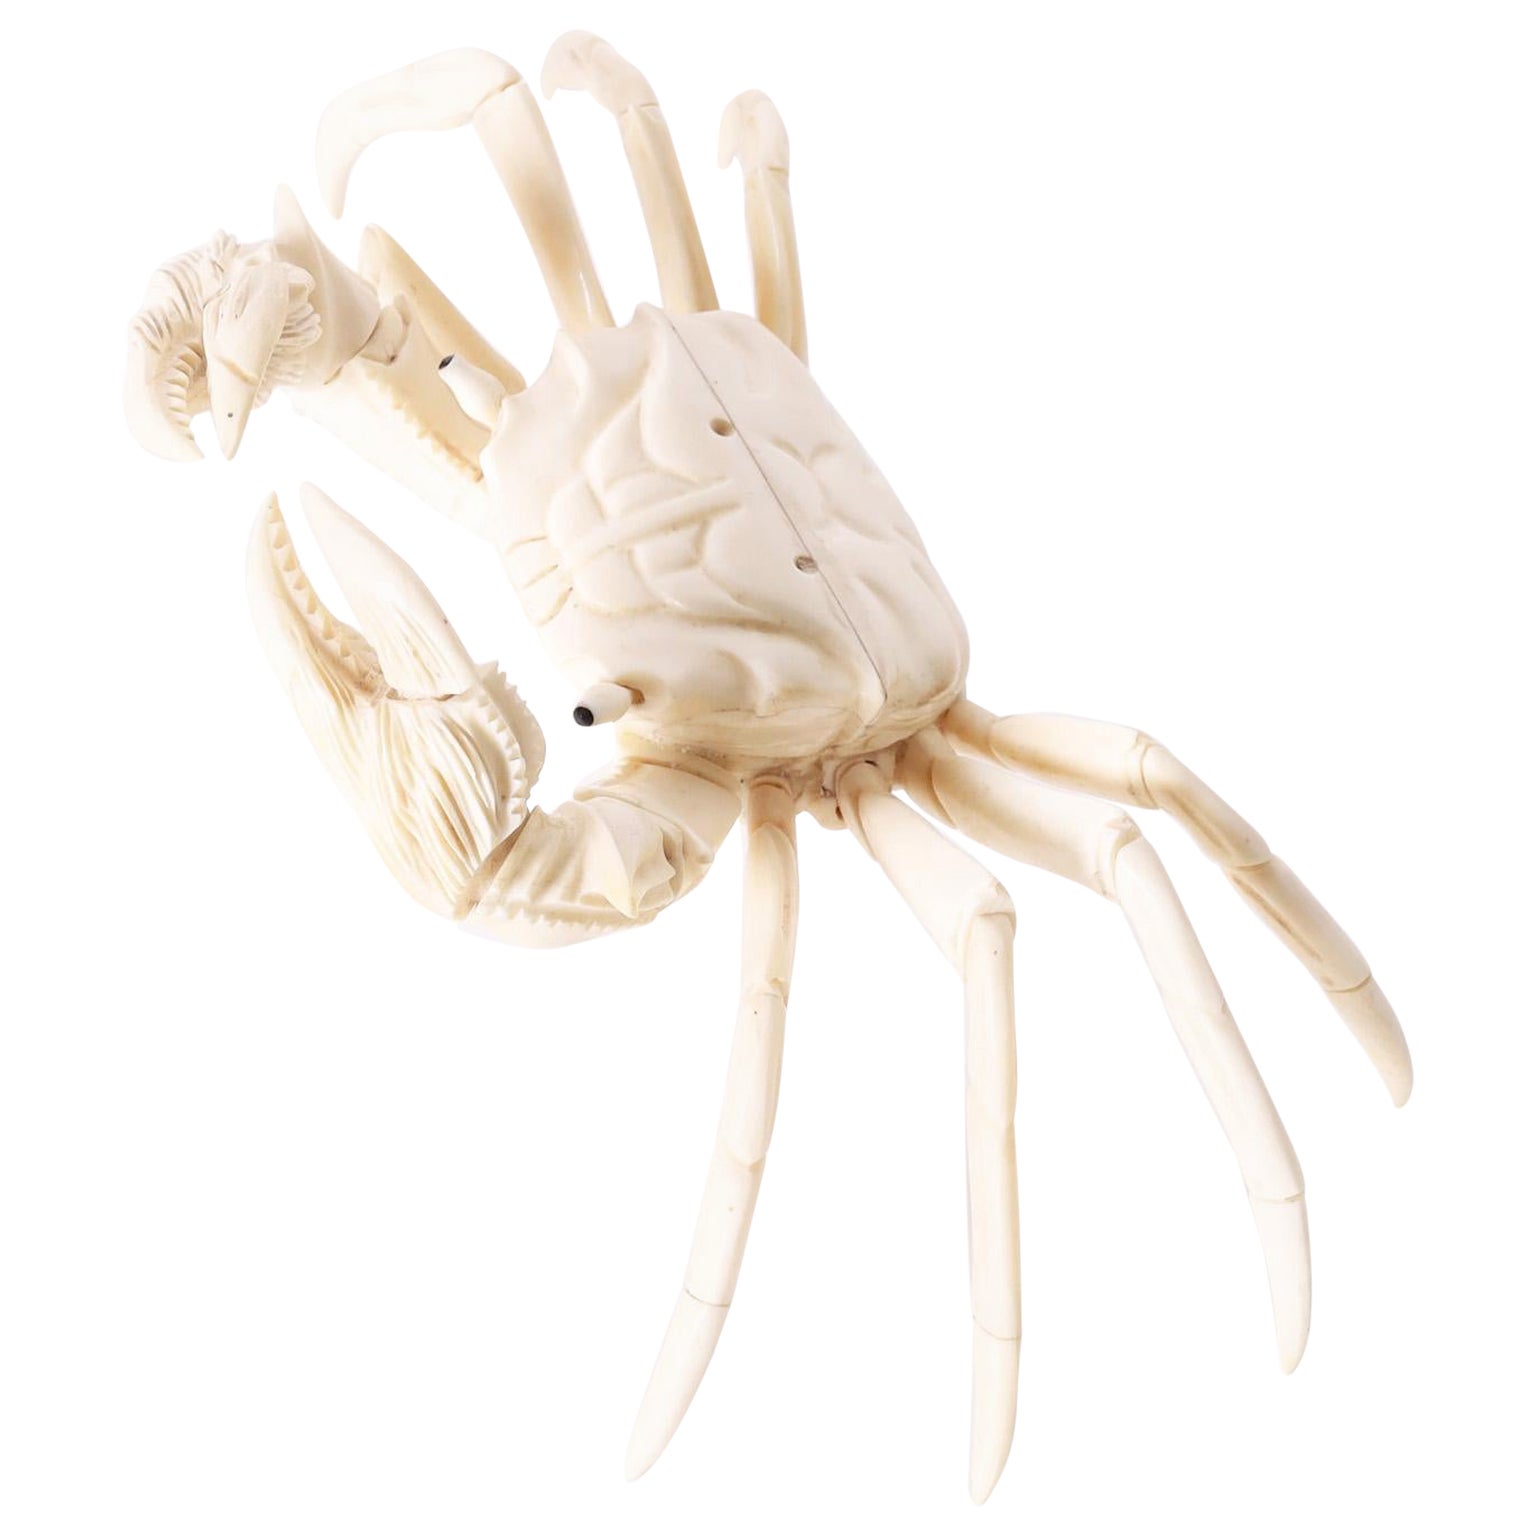 Carved Bone Crab